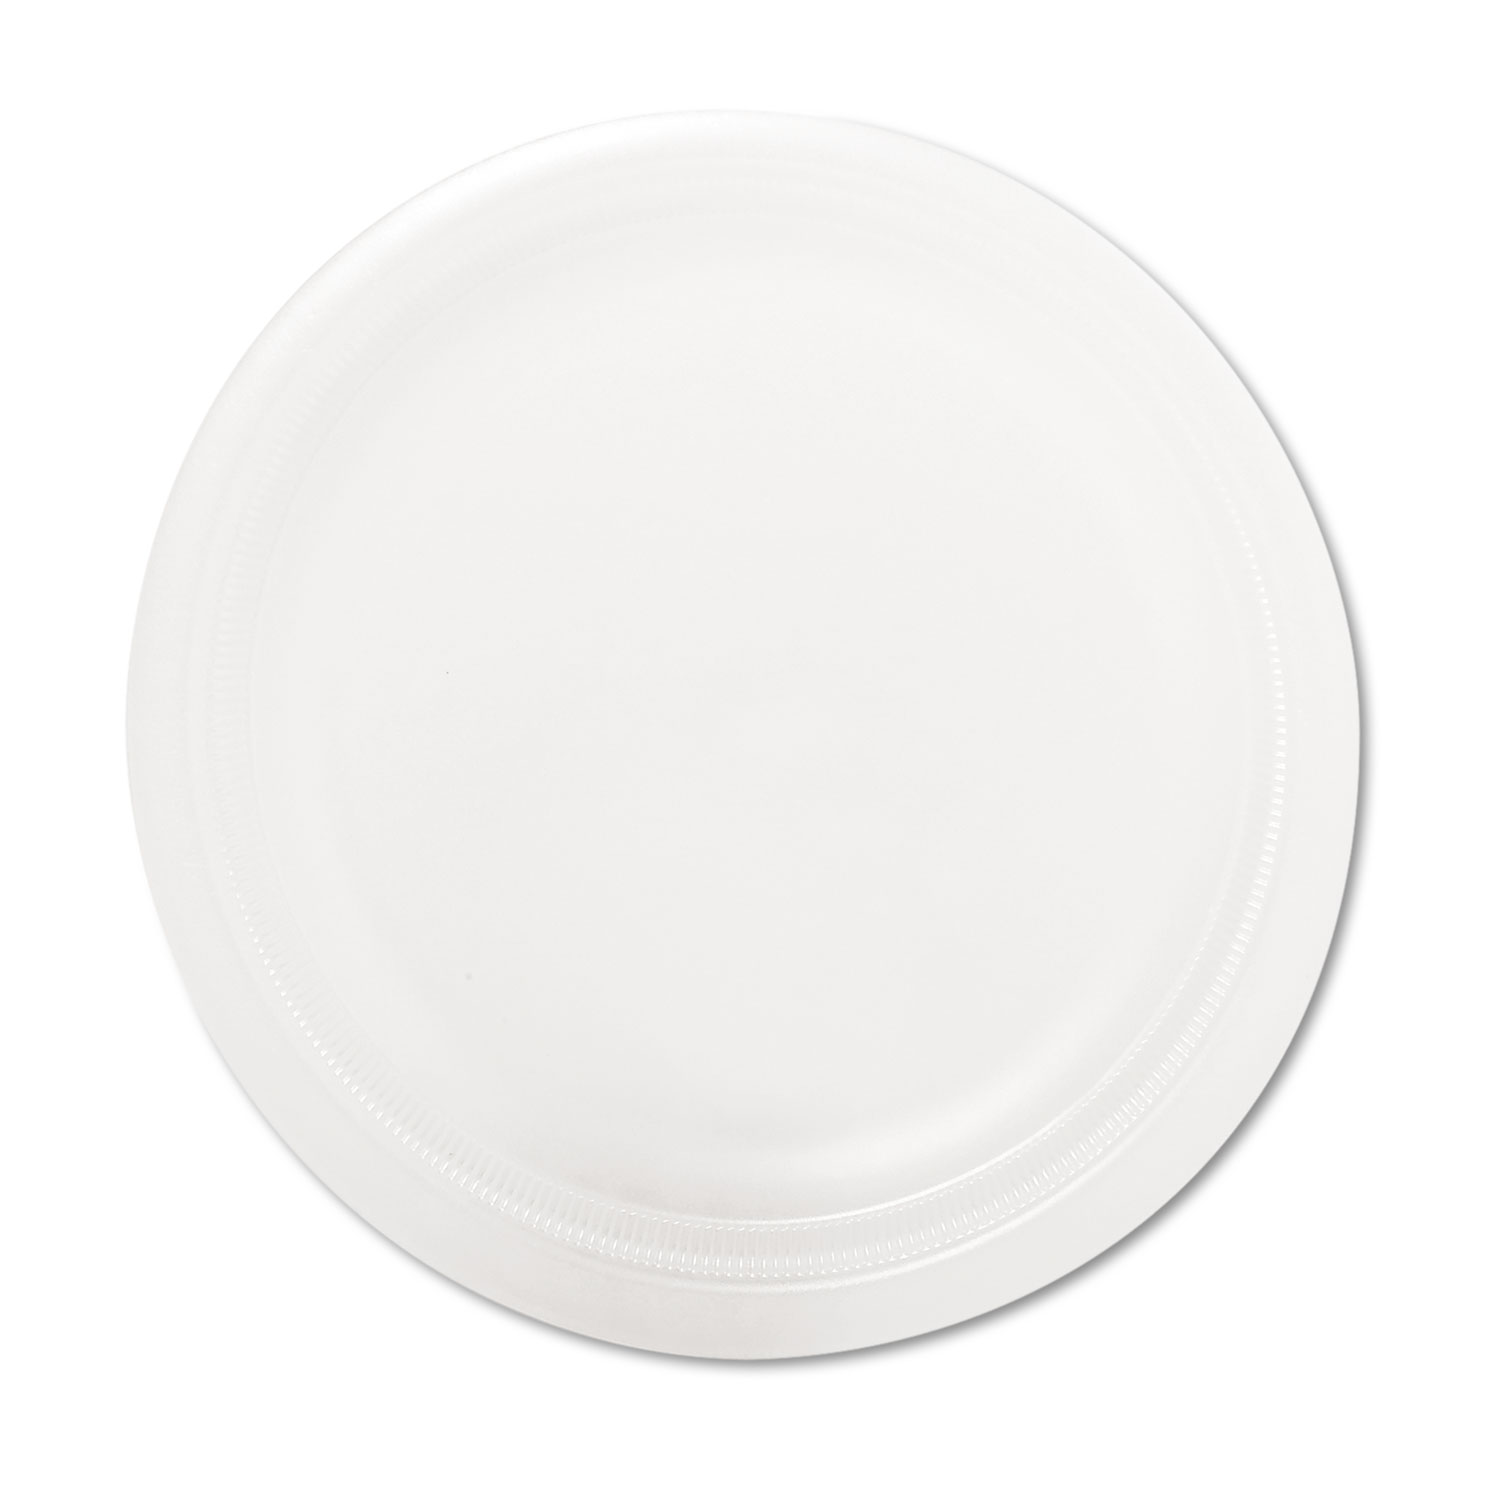 Quiet Classic Laminated Foam Dinnerware Plate, 9 dia, White, 125/Pack -  mastersupplyonline